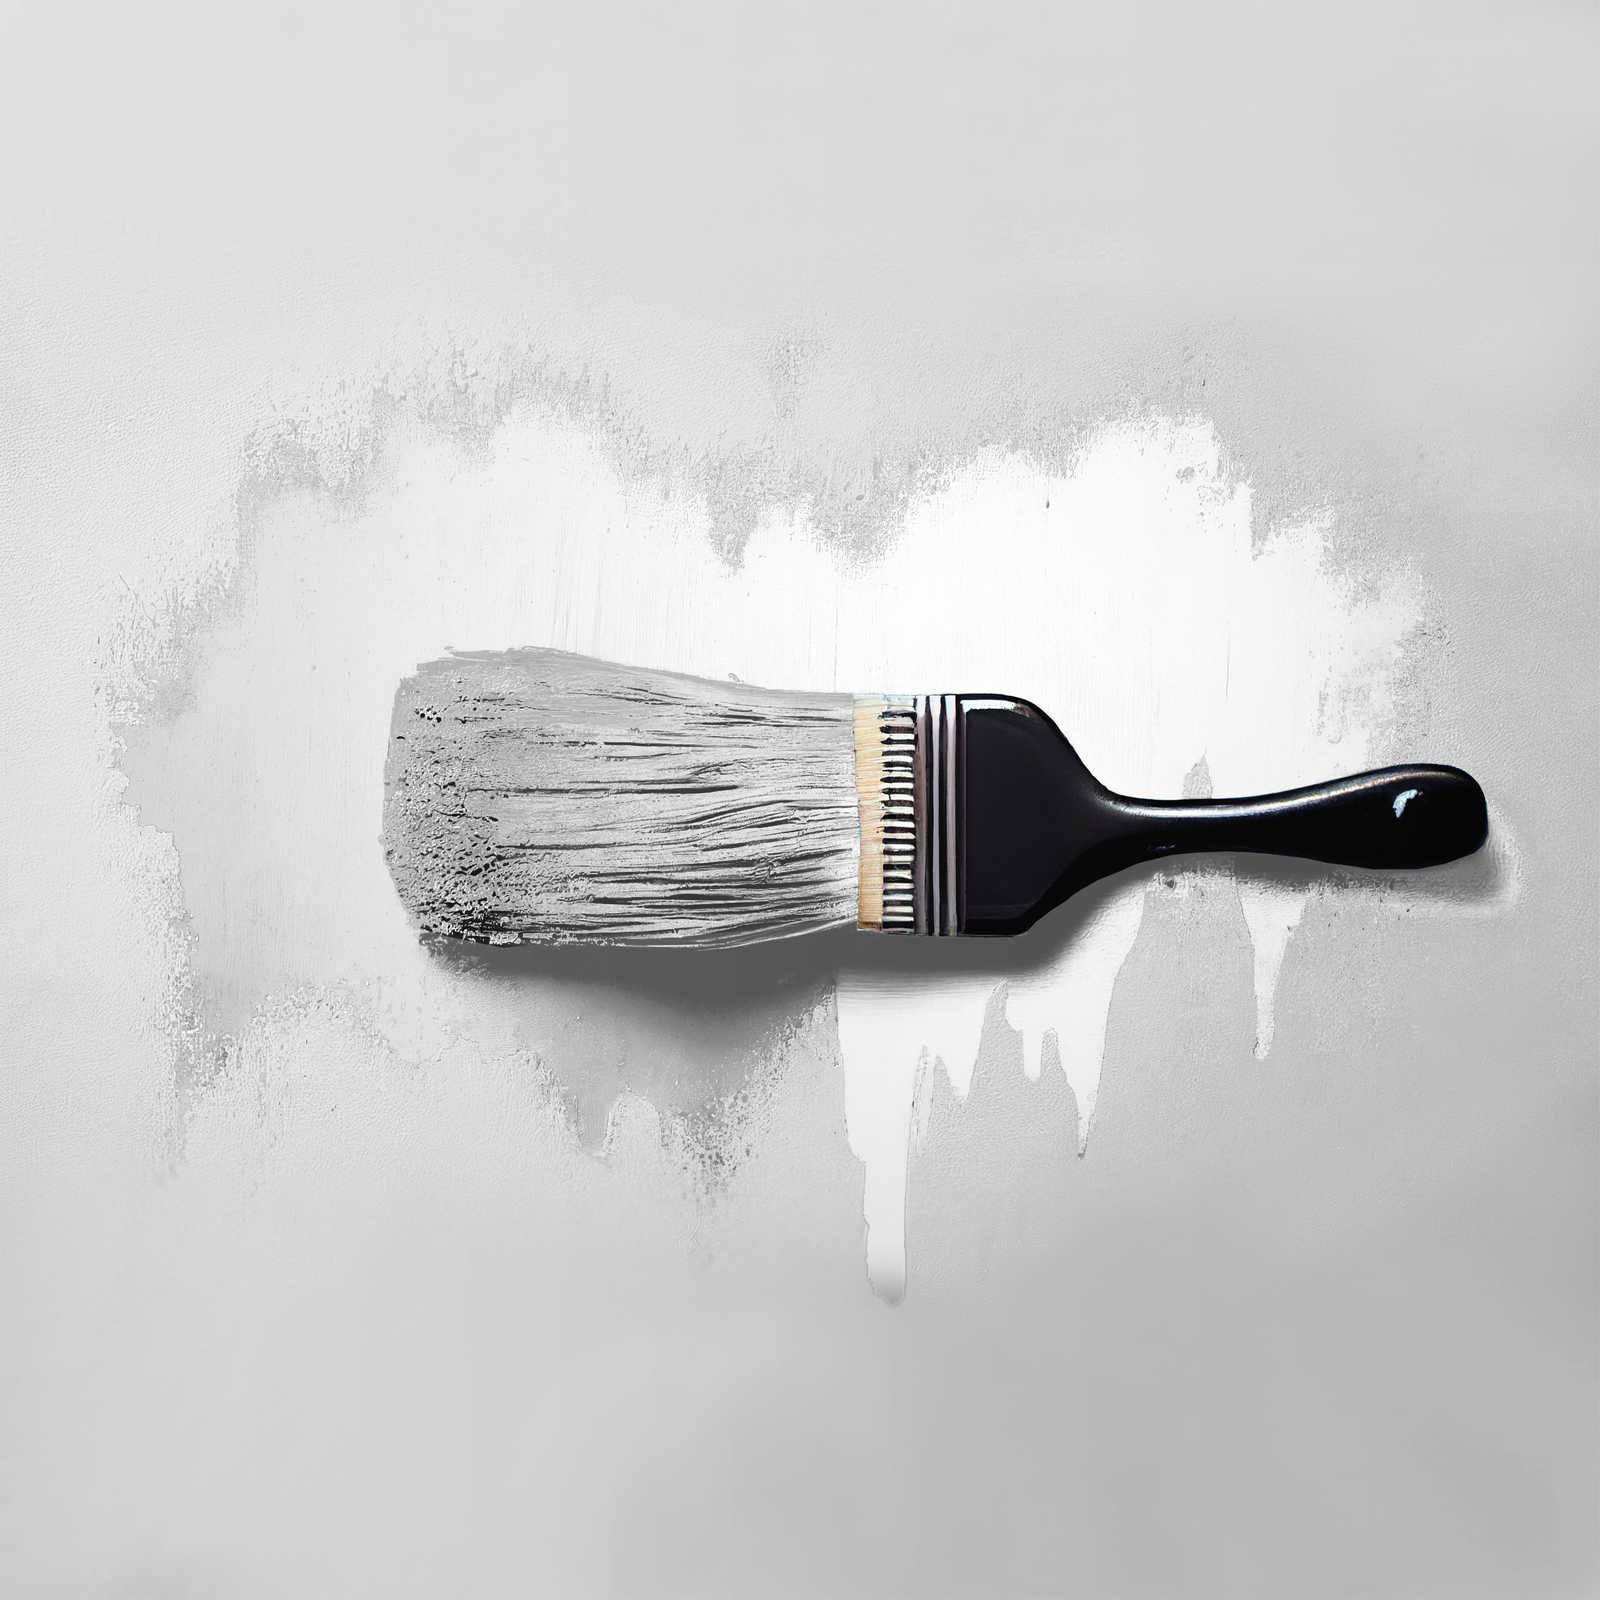             Wall Paint TCK1000 »Melting Marshmellow« in neutral white – 5.0 litre
        